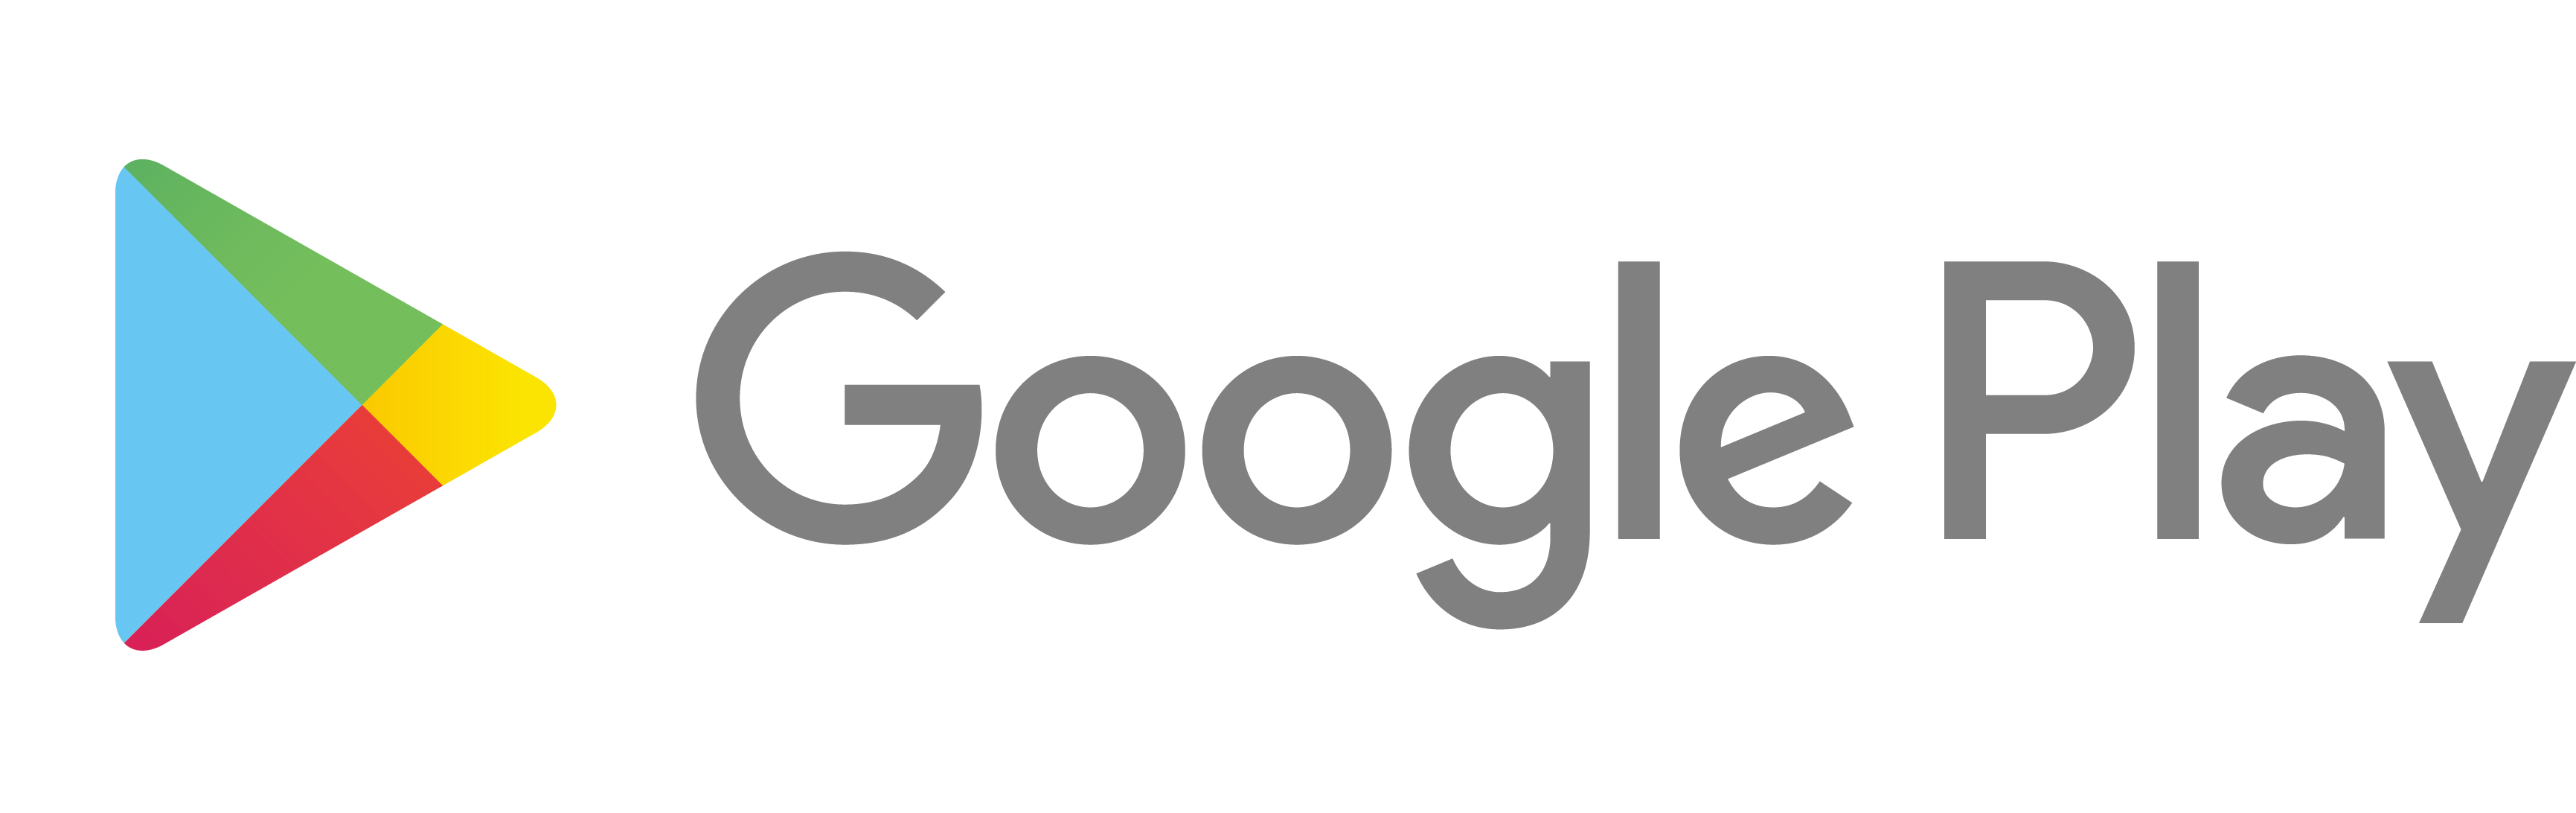 Google Play. Значок Google Play. Гугл плей Маркет логотип. Google Play логотип PNG. Рейтинг google play